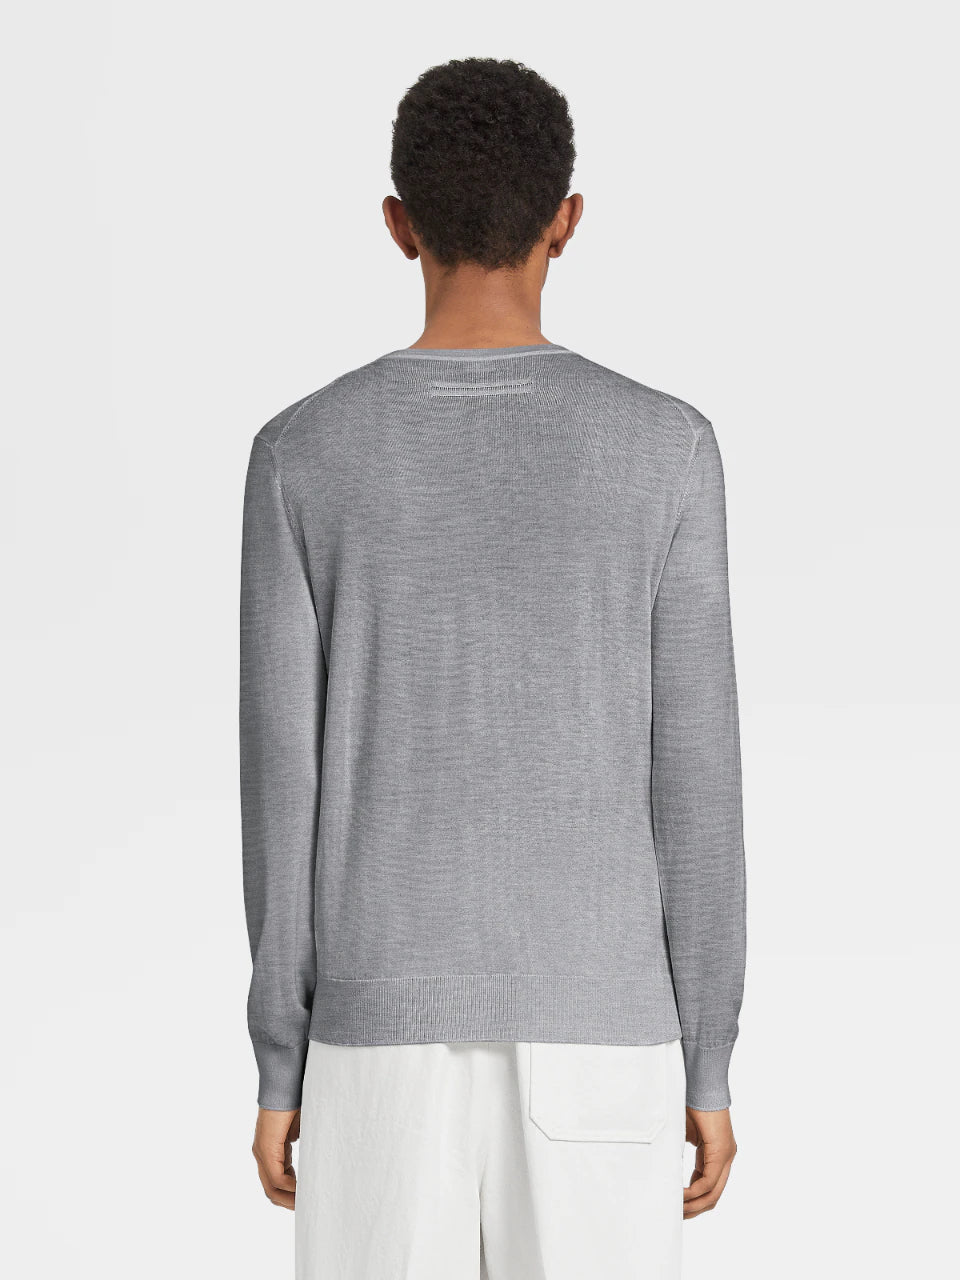 Zegna Sweater in Light Grey